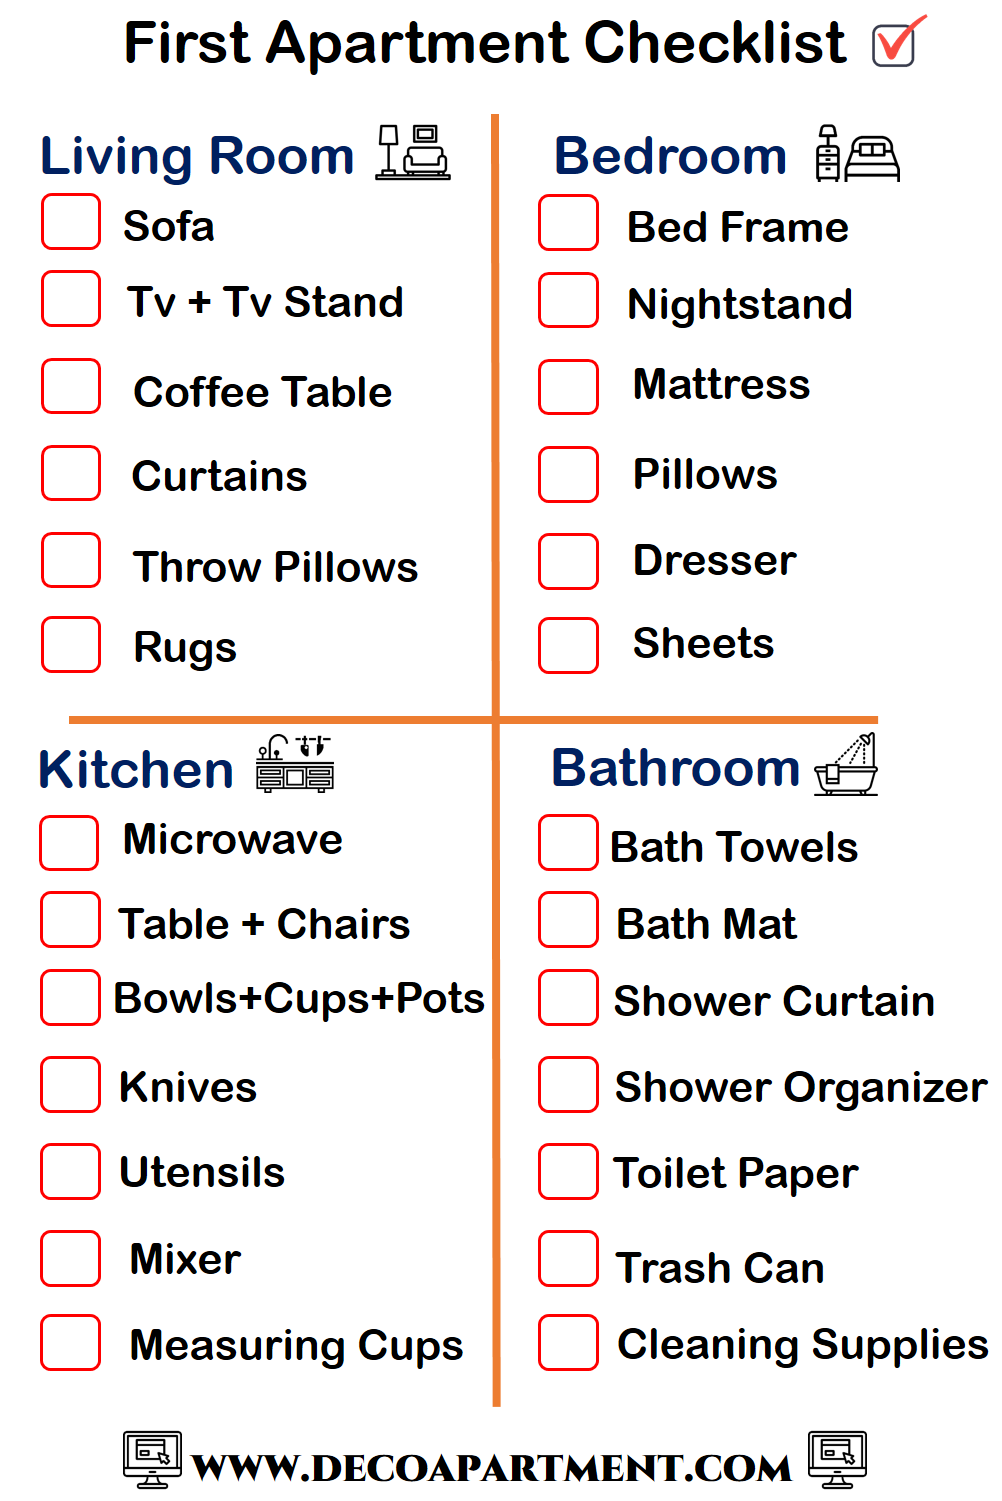 My First Apartment Checklist: FREE Printable  First apartment checklist, First  apartment, Apartment checklist